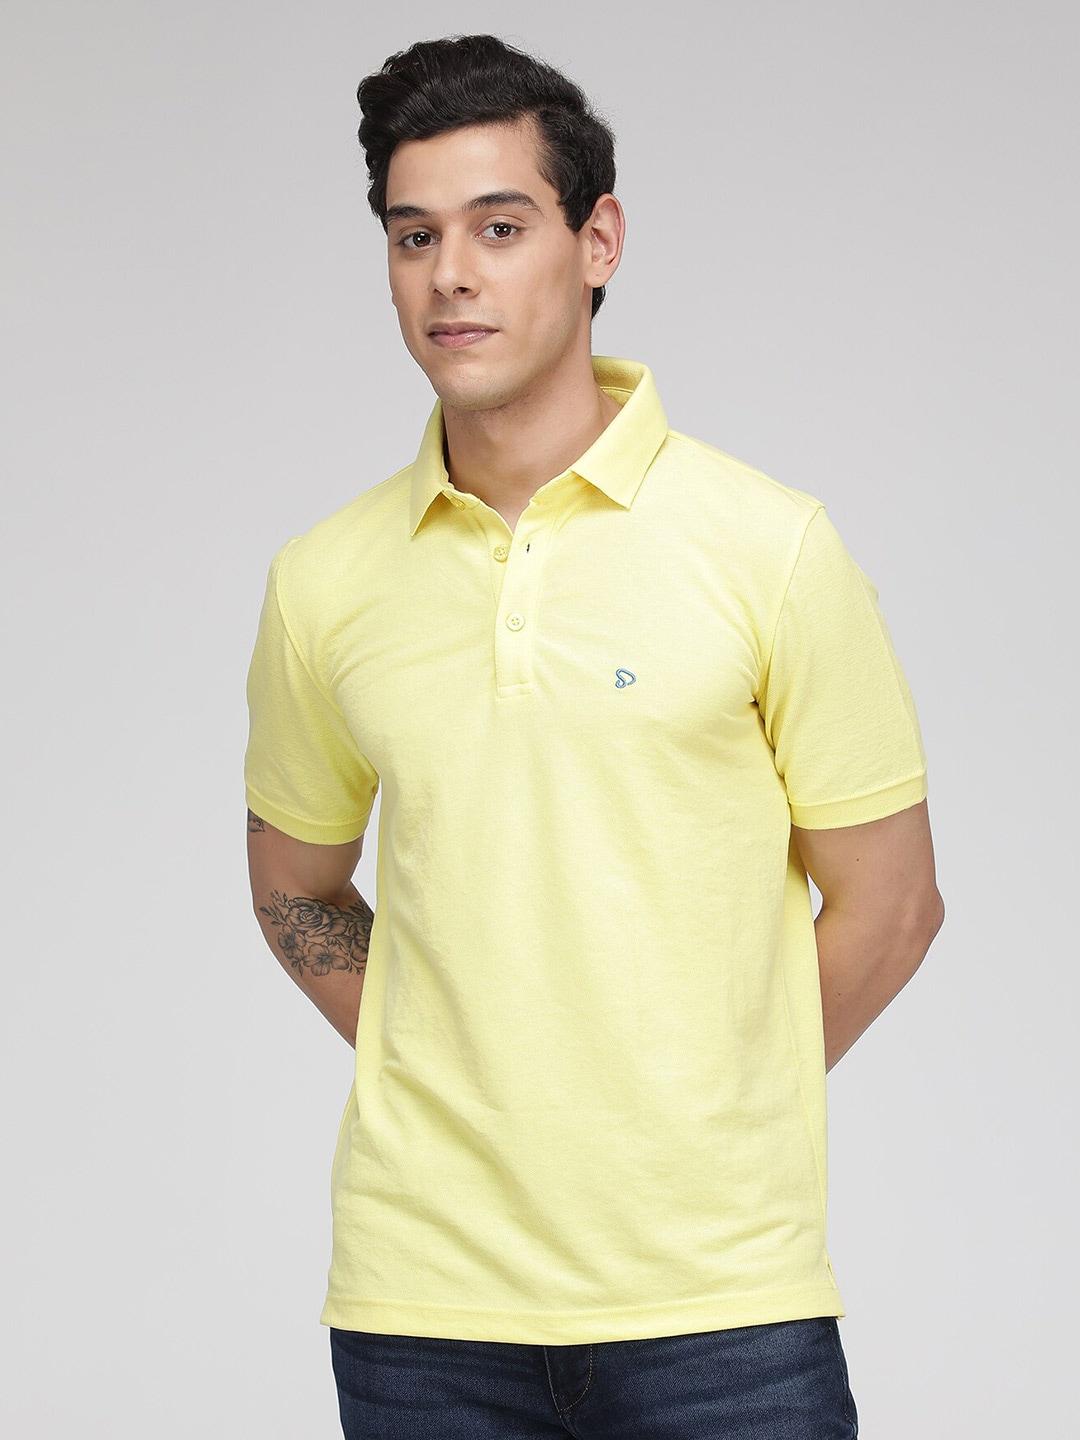 sporto-men-yellow-polo-collar-cotton-t-shirt